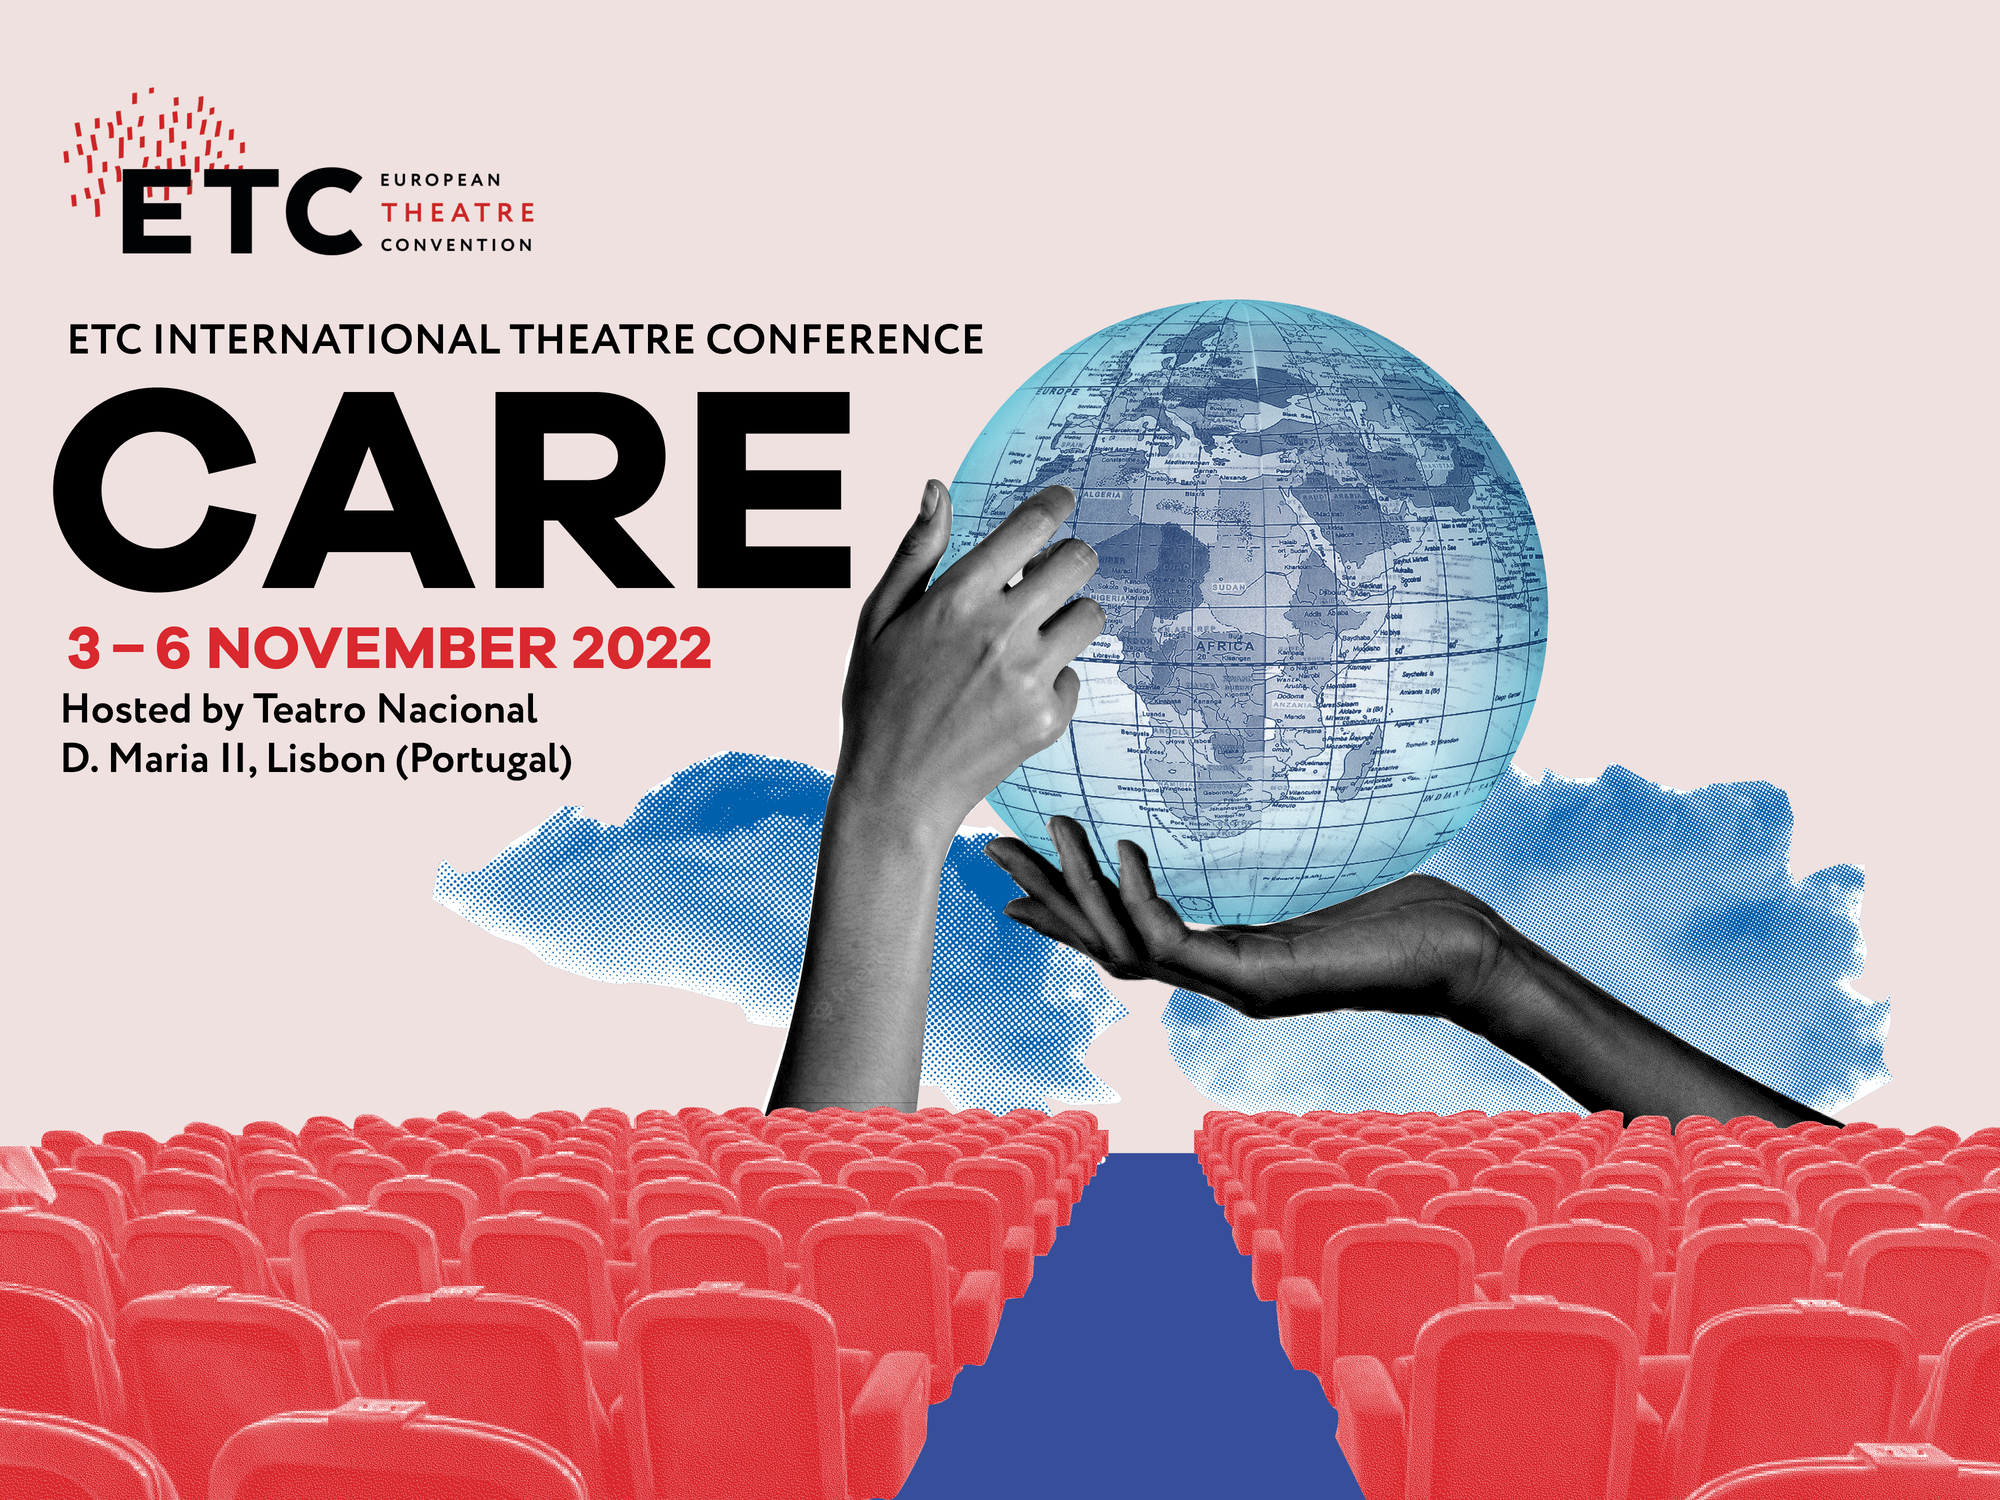 Conferência Internacional de Teatro da European Theatre Convention